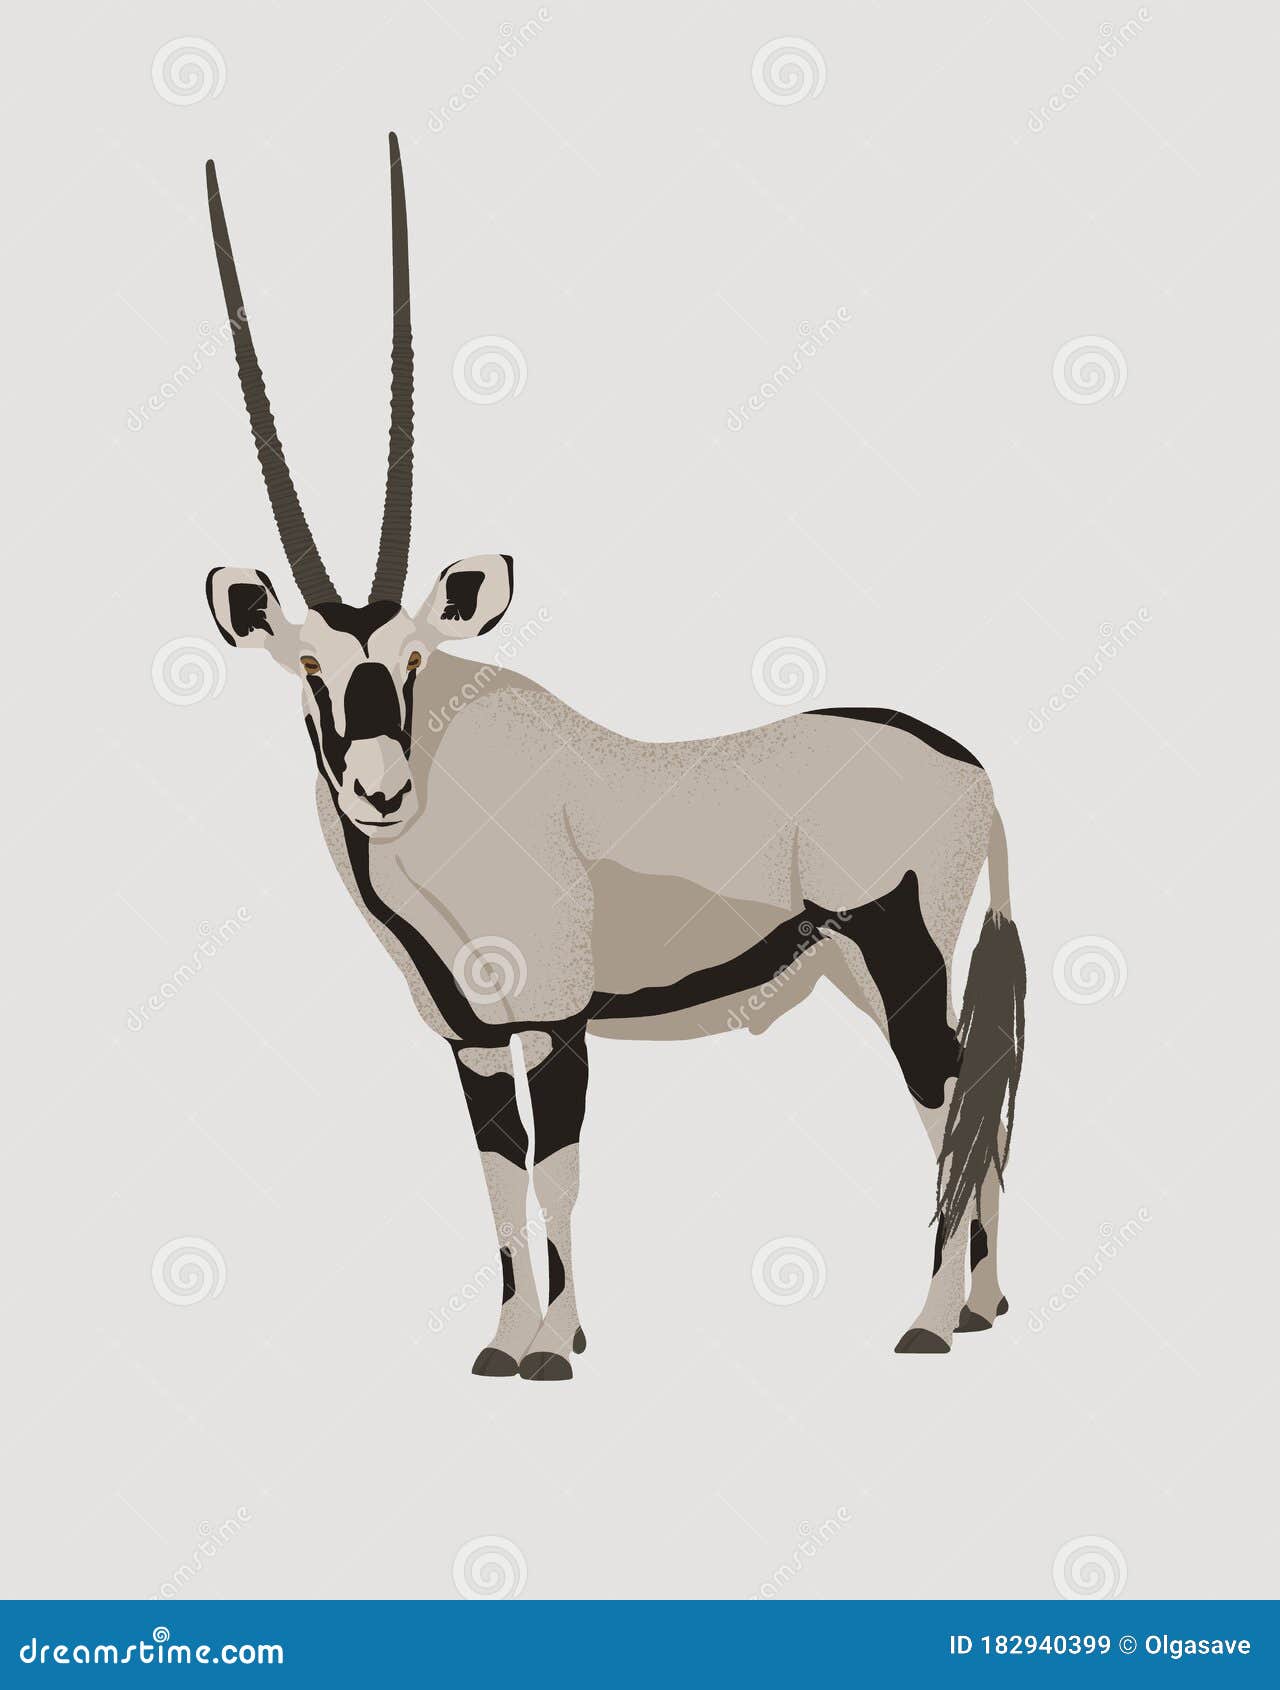 oryx antelope  . gemsbok with long straight horns and dark markings. desert animal  conservation